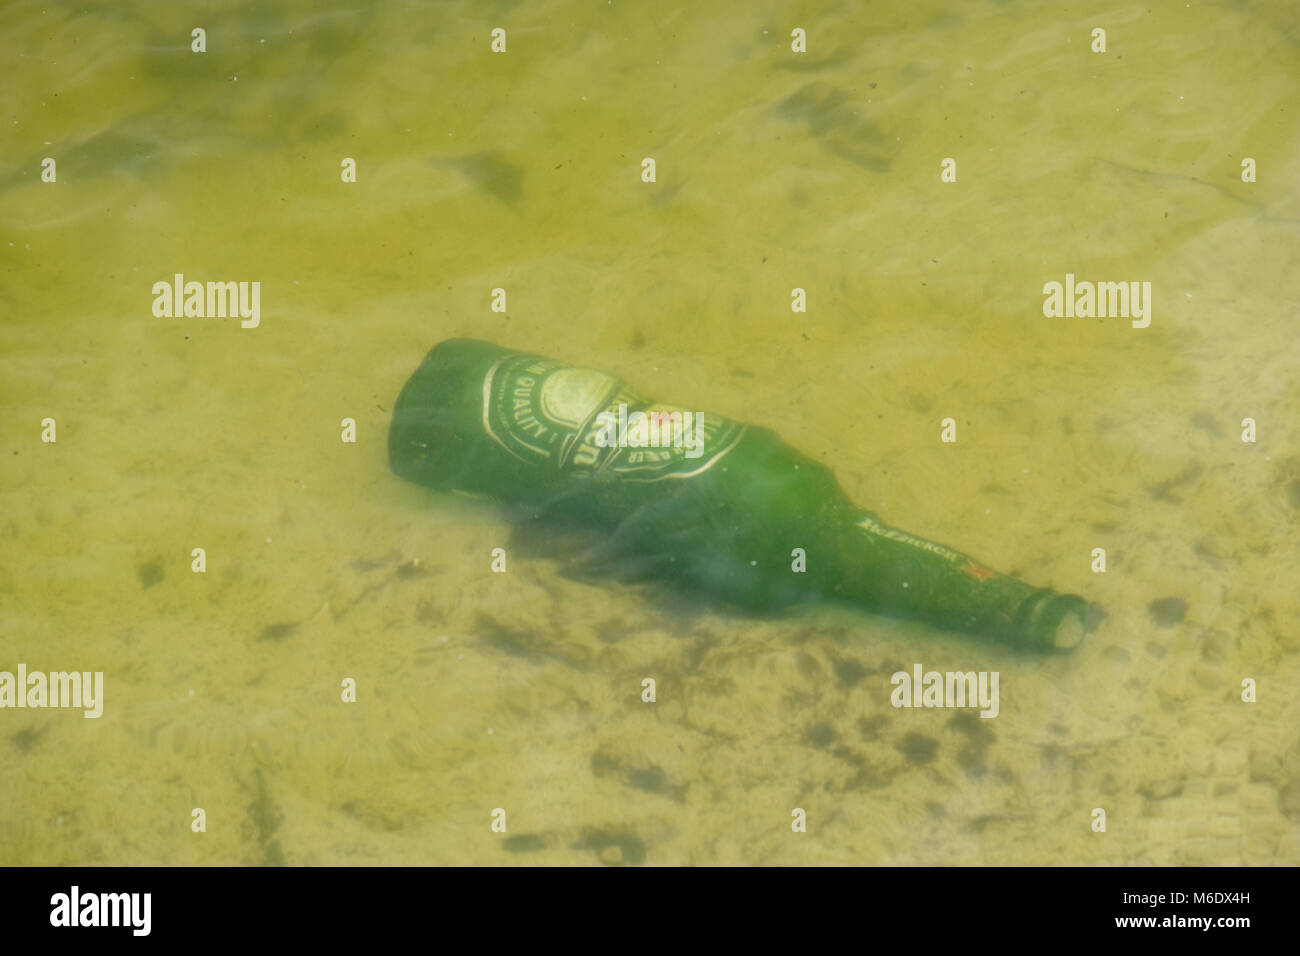 Heineken Beer Bottle dropped in Pond / Lake Stock Photo